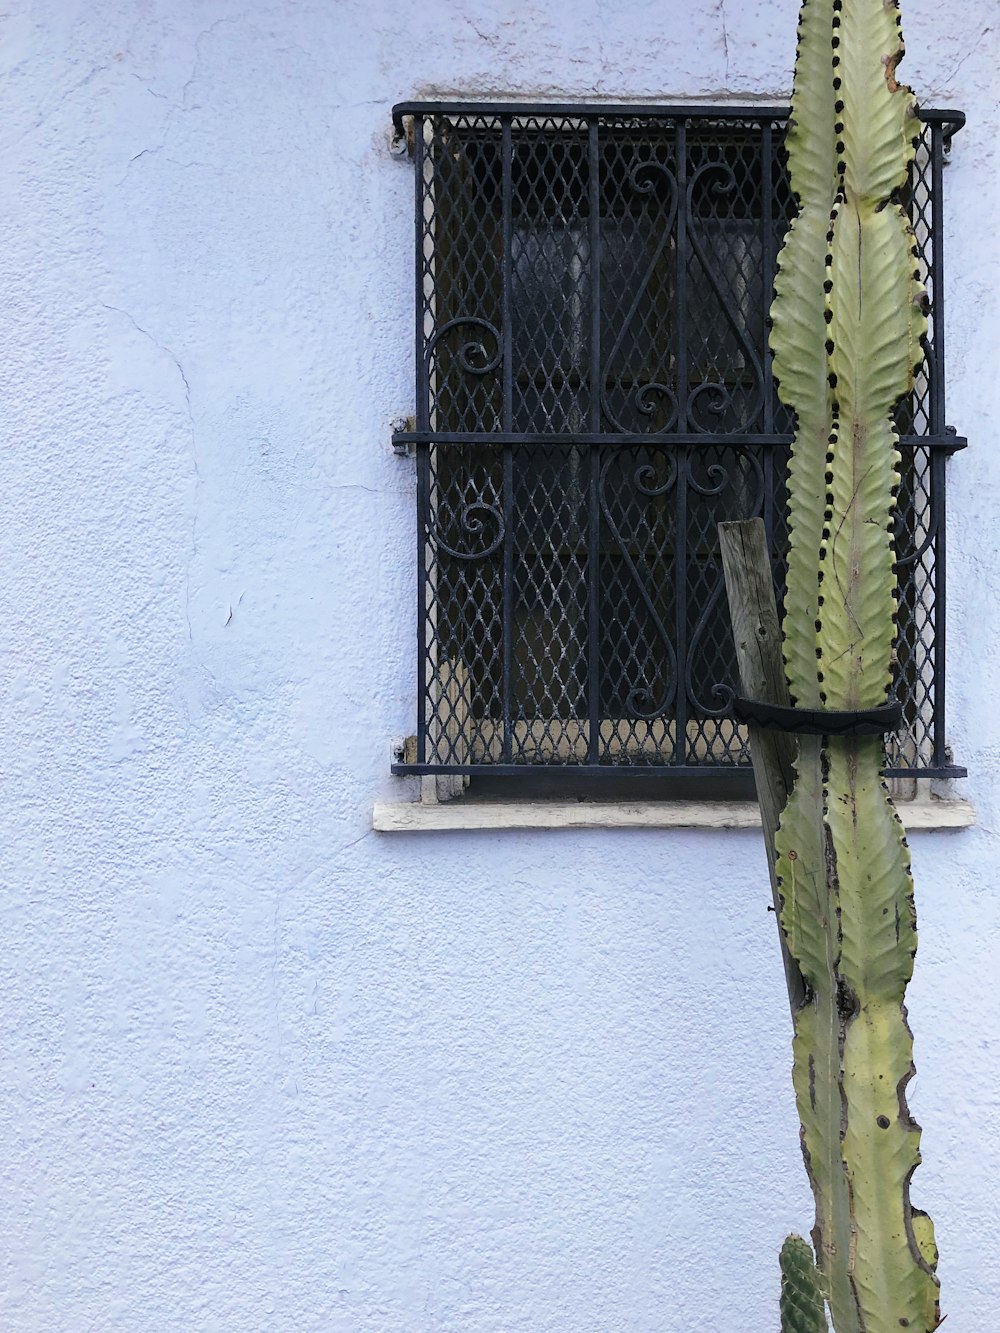 green cactus plant near window grills